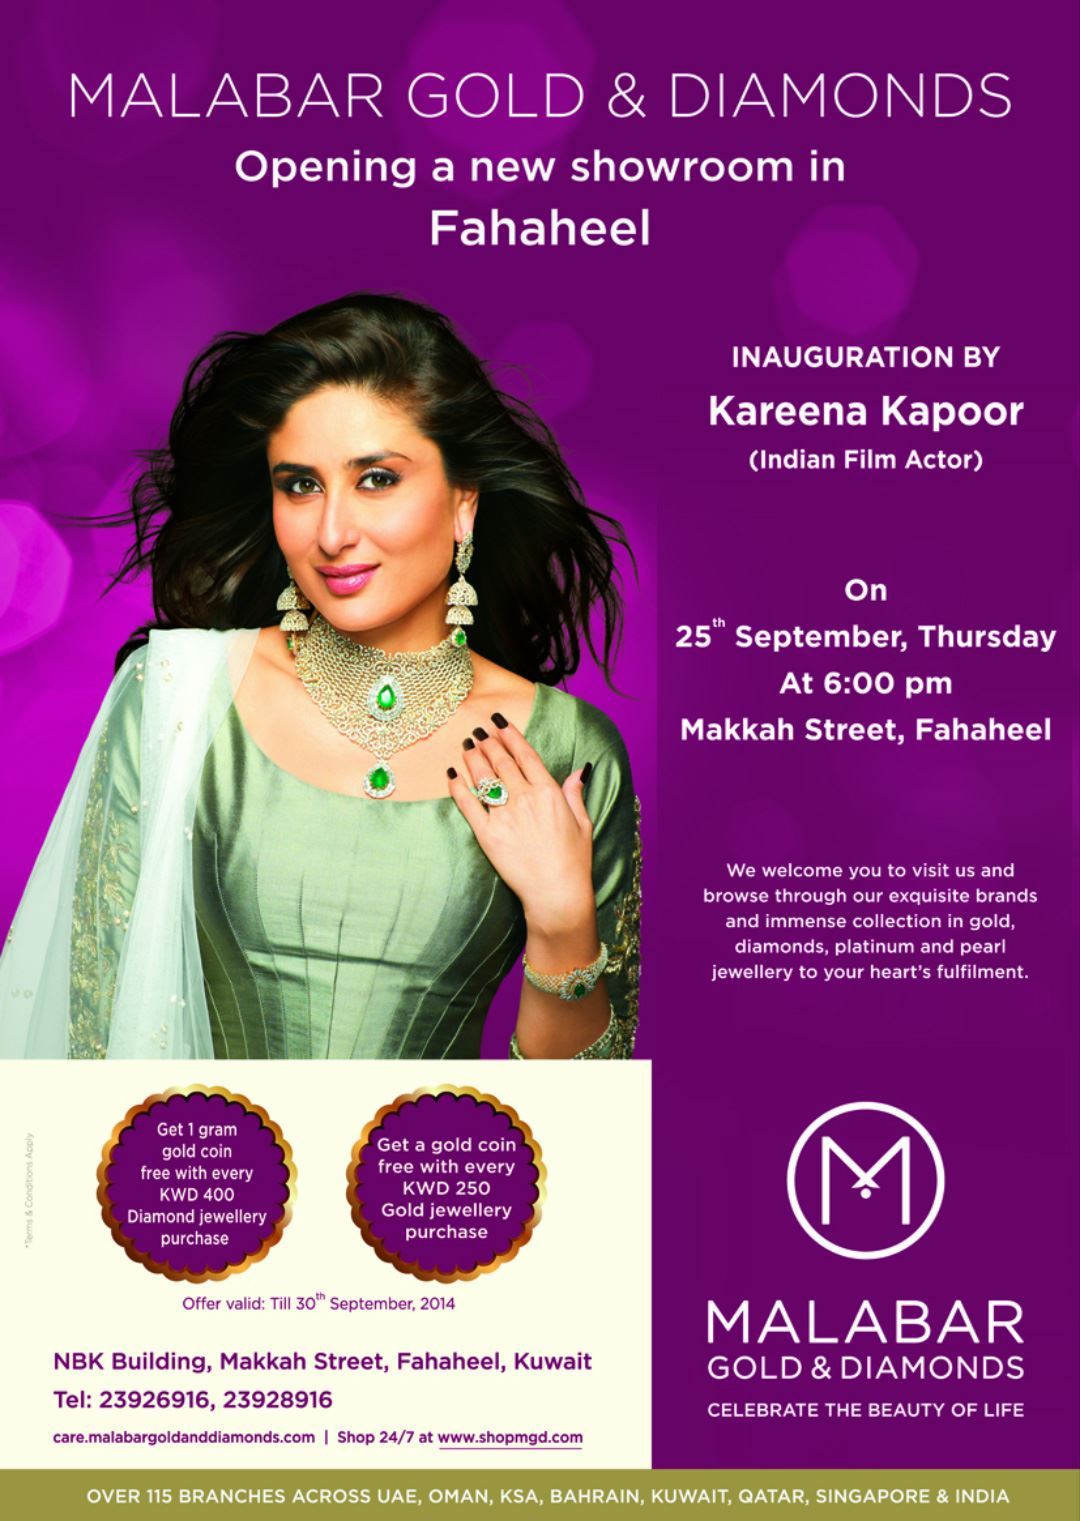 Kareena Kapur in Kuwait for the opening of Malabar's new Showroom